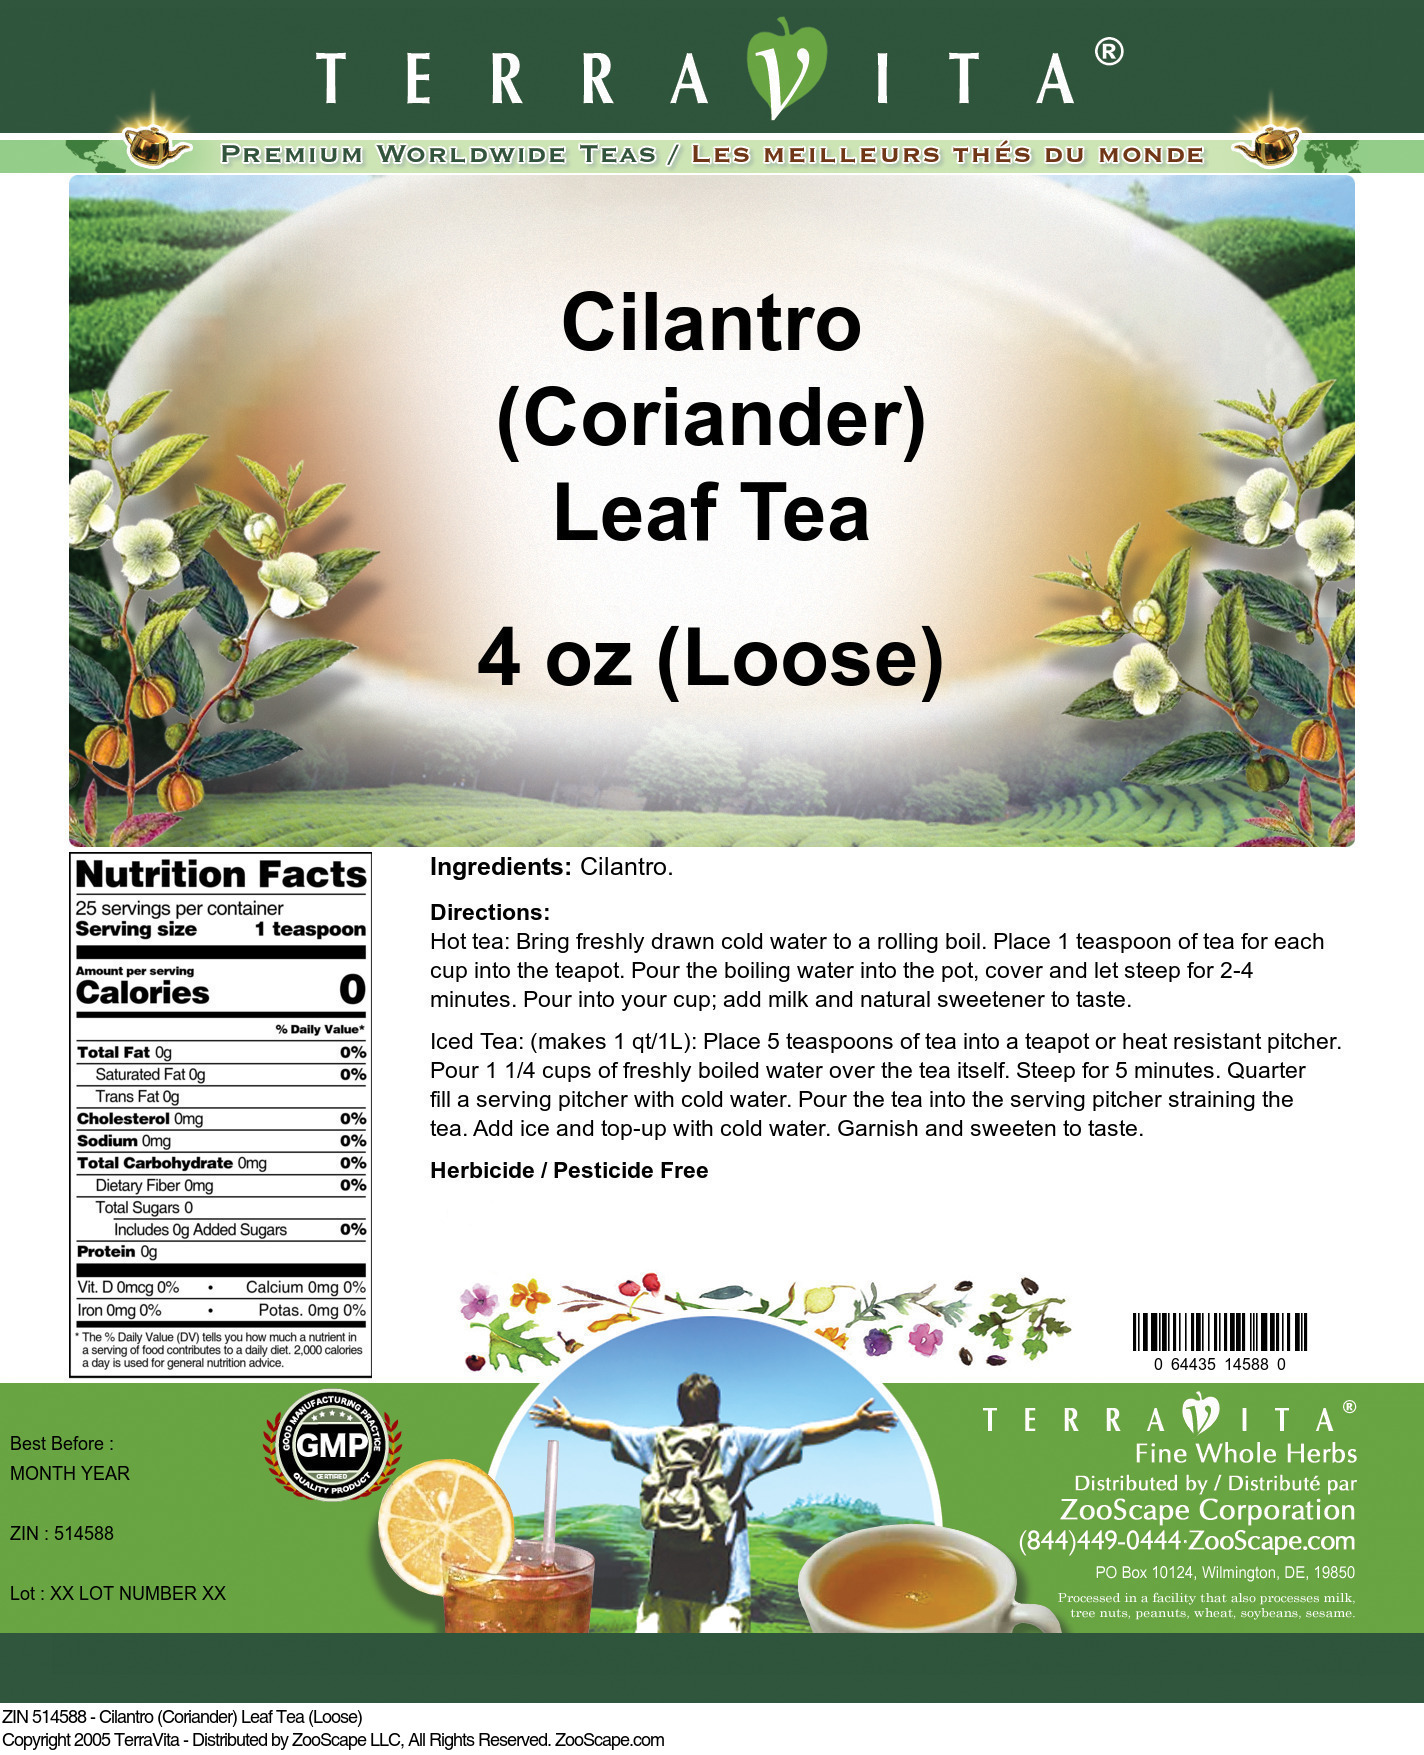 Cilantro (Coriander) Leaf Tea (Loose) - Label